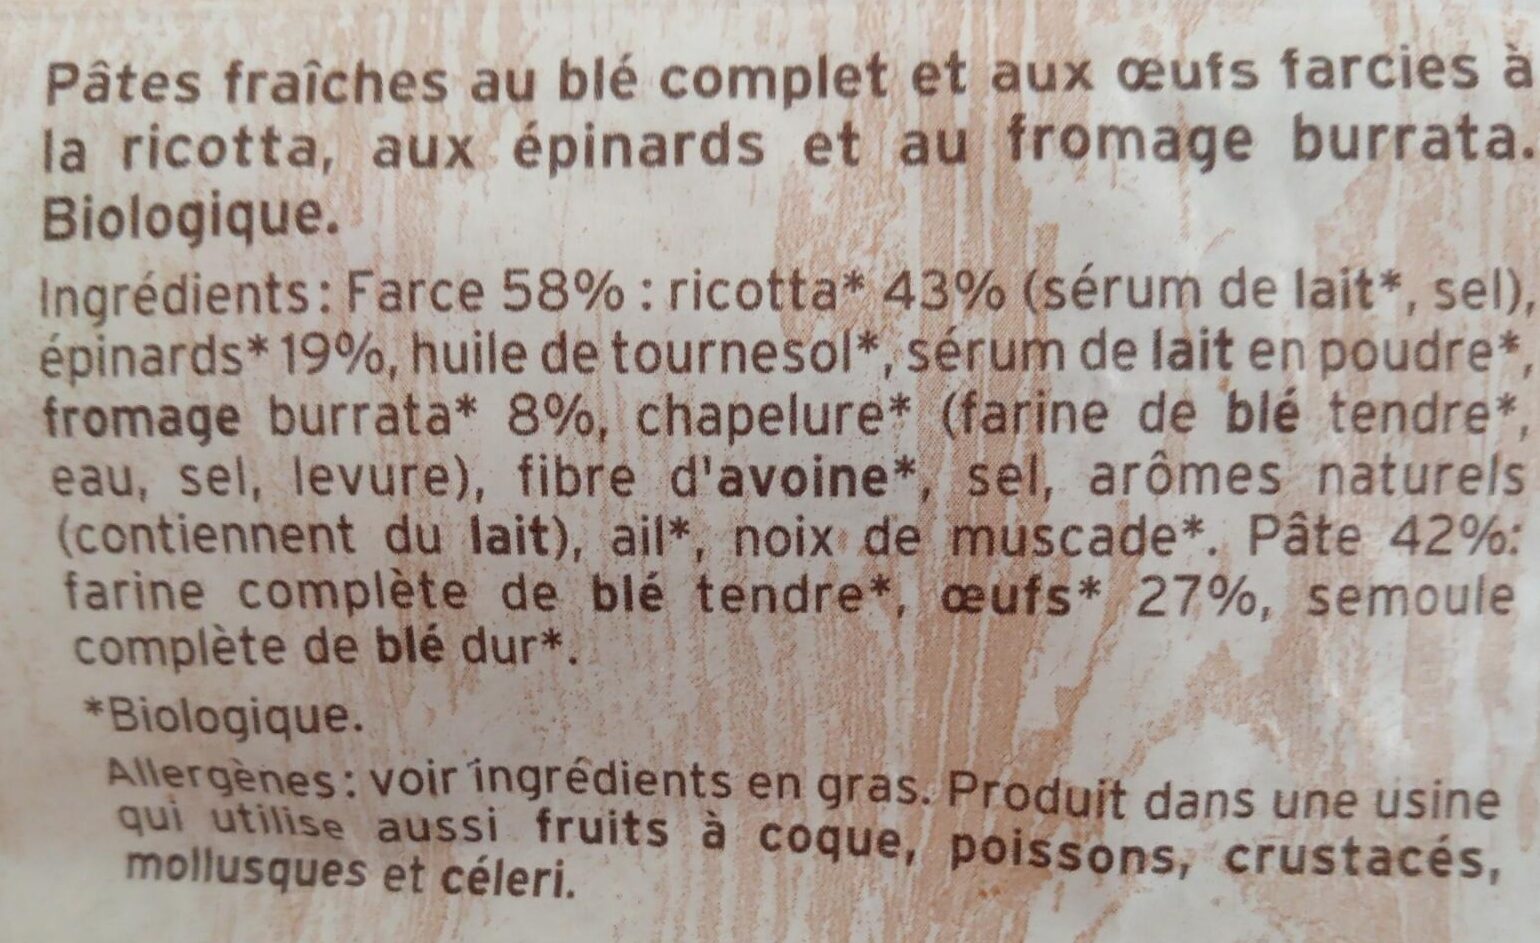 Ravioli bio au blé complet épinards ricotta burrata - Ingredients - fr